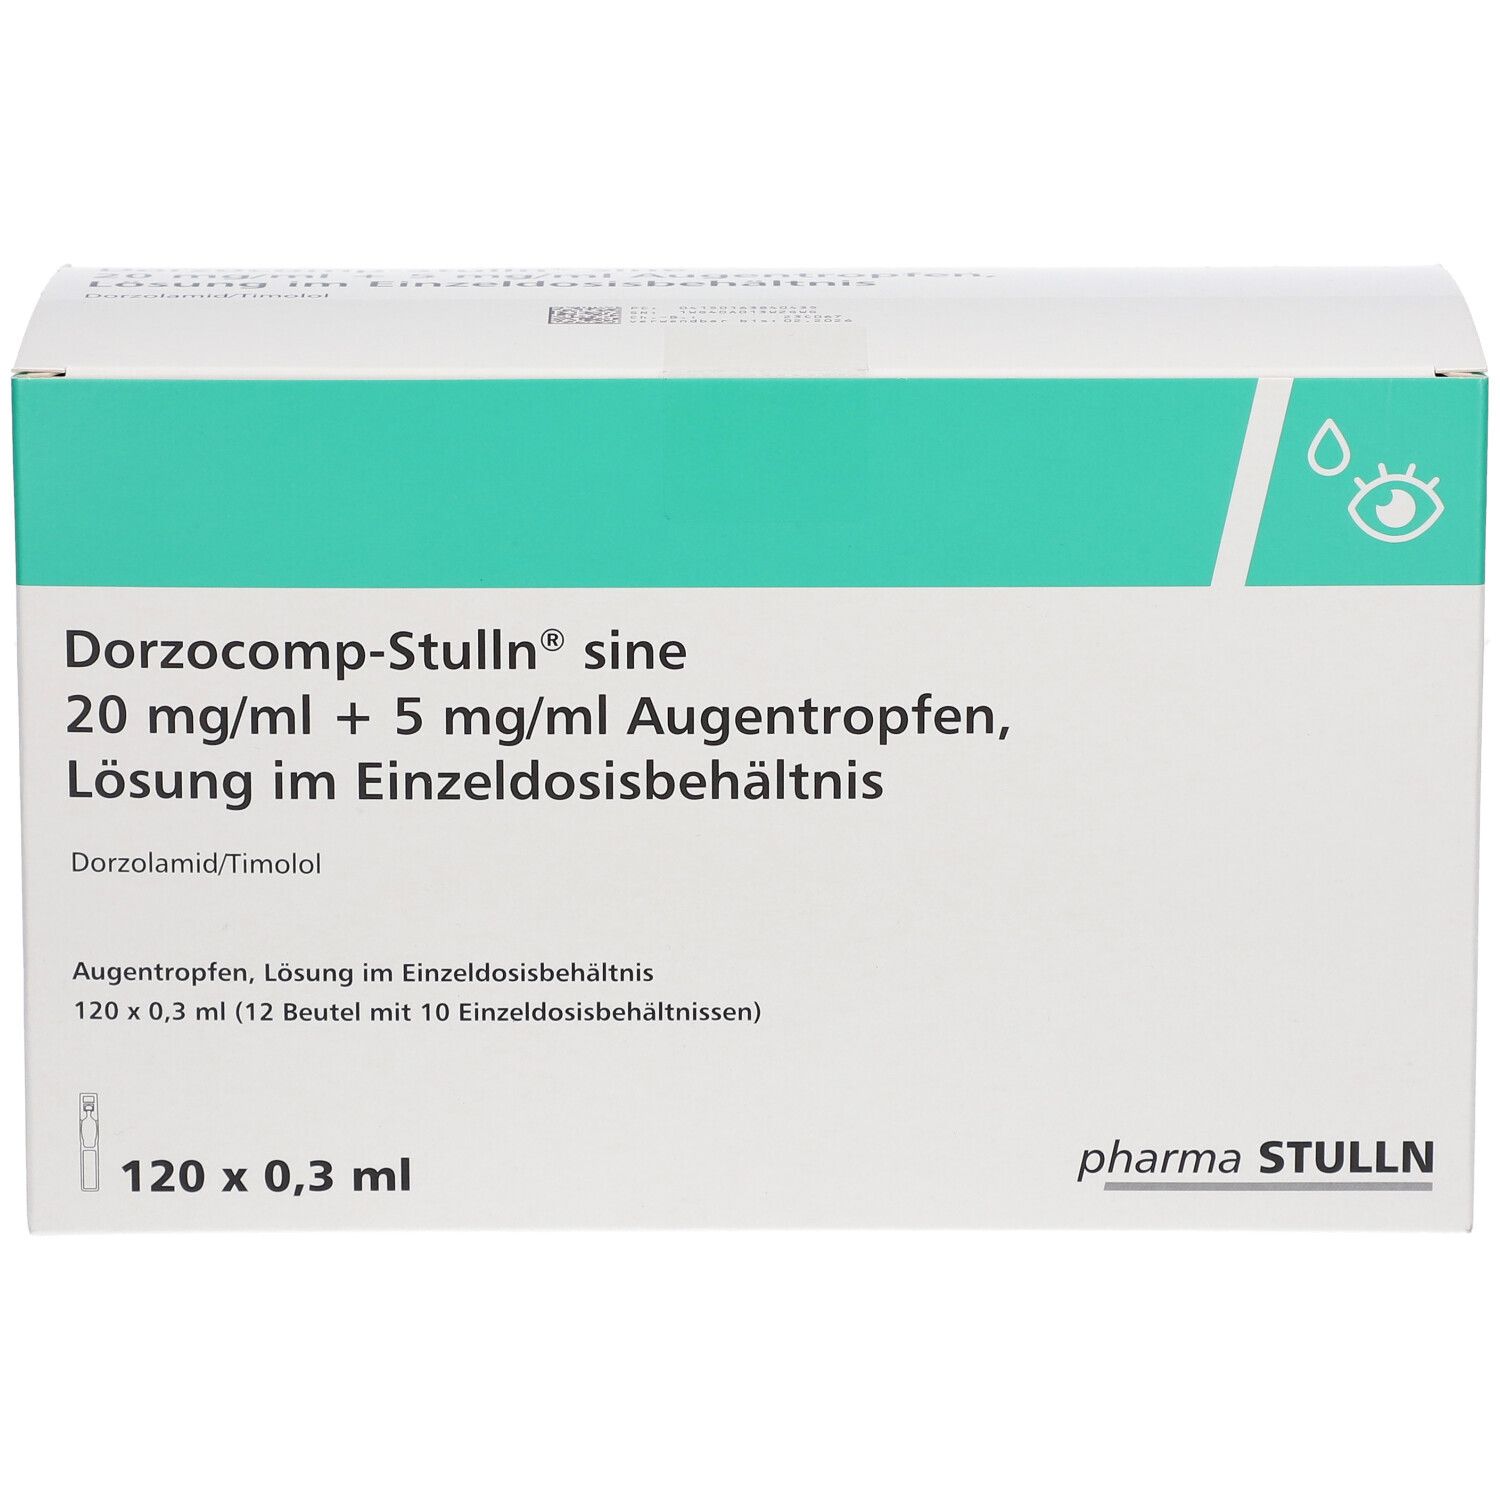 Dorzocomp-Stulln® sine 20 mg/ml + 5 mg/ml